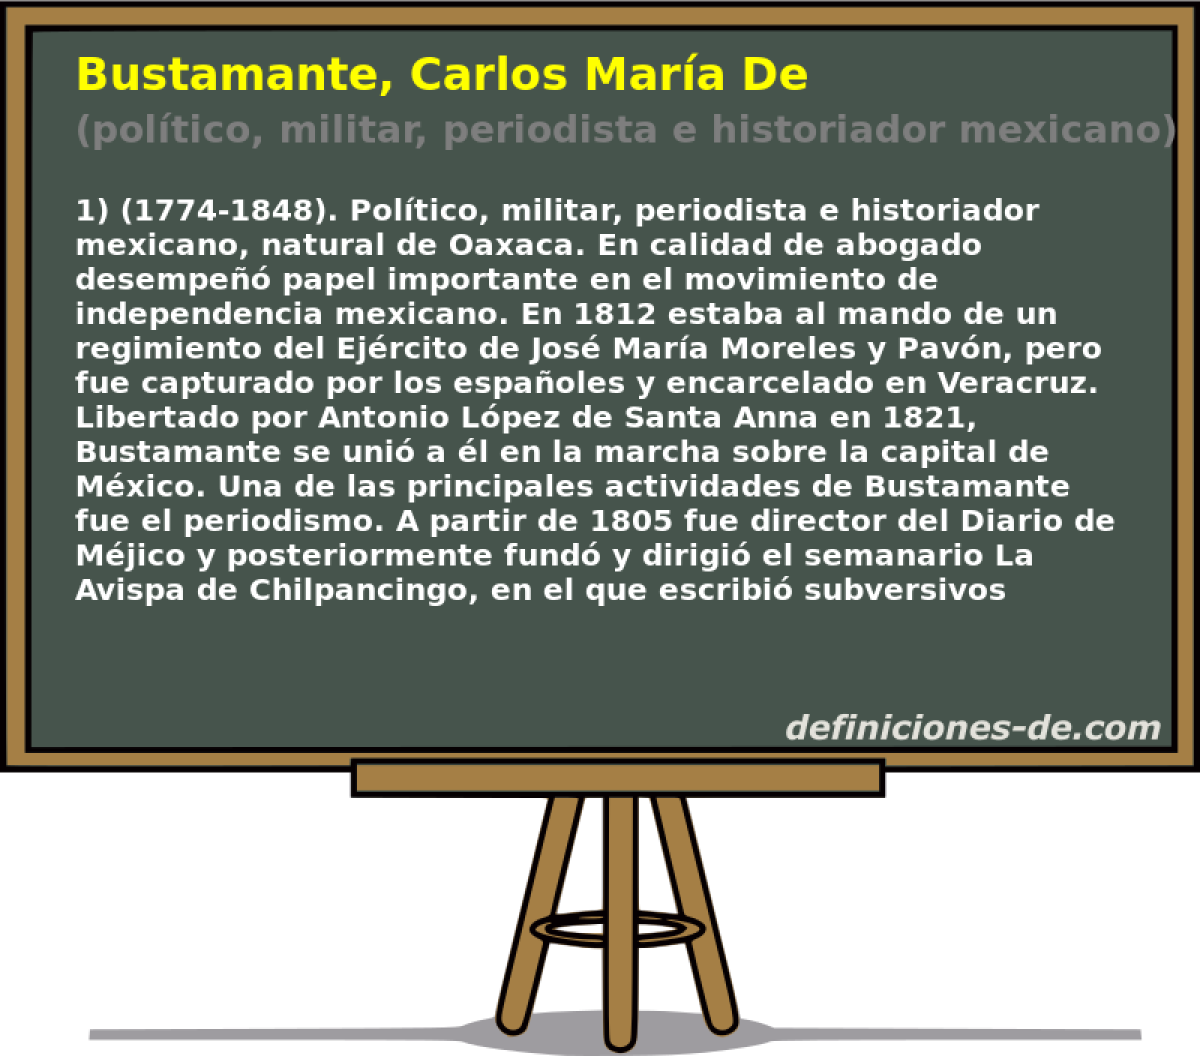 Bustamante, Carlos Mara De (poltico, militar, periodista e historiador mexicano)